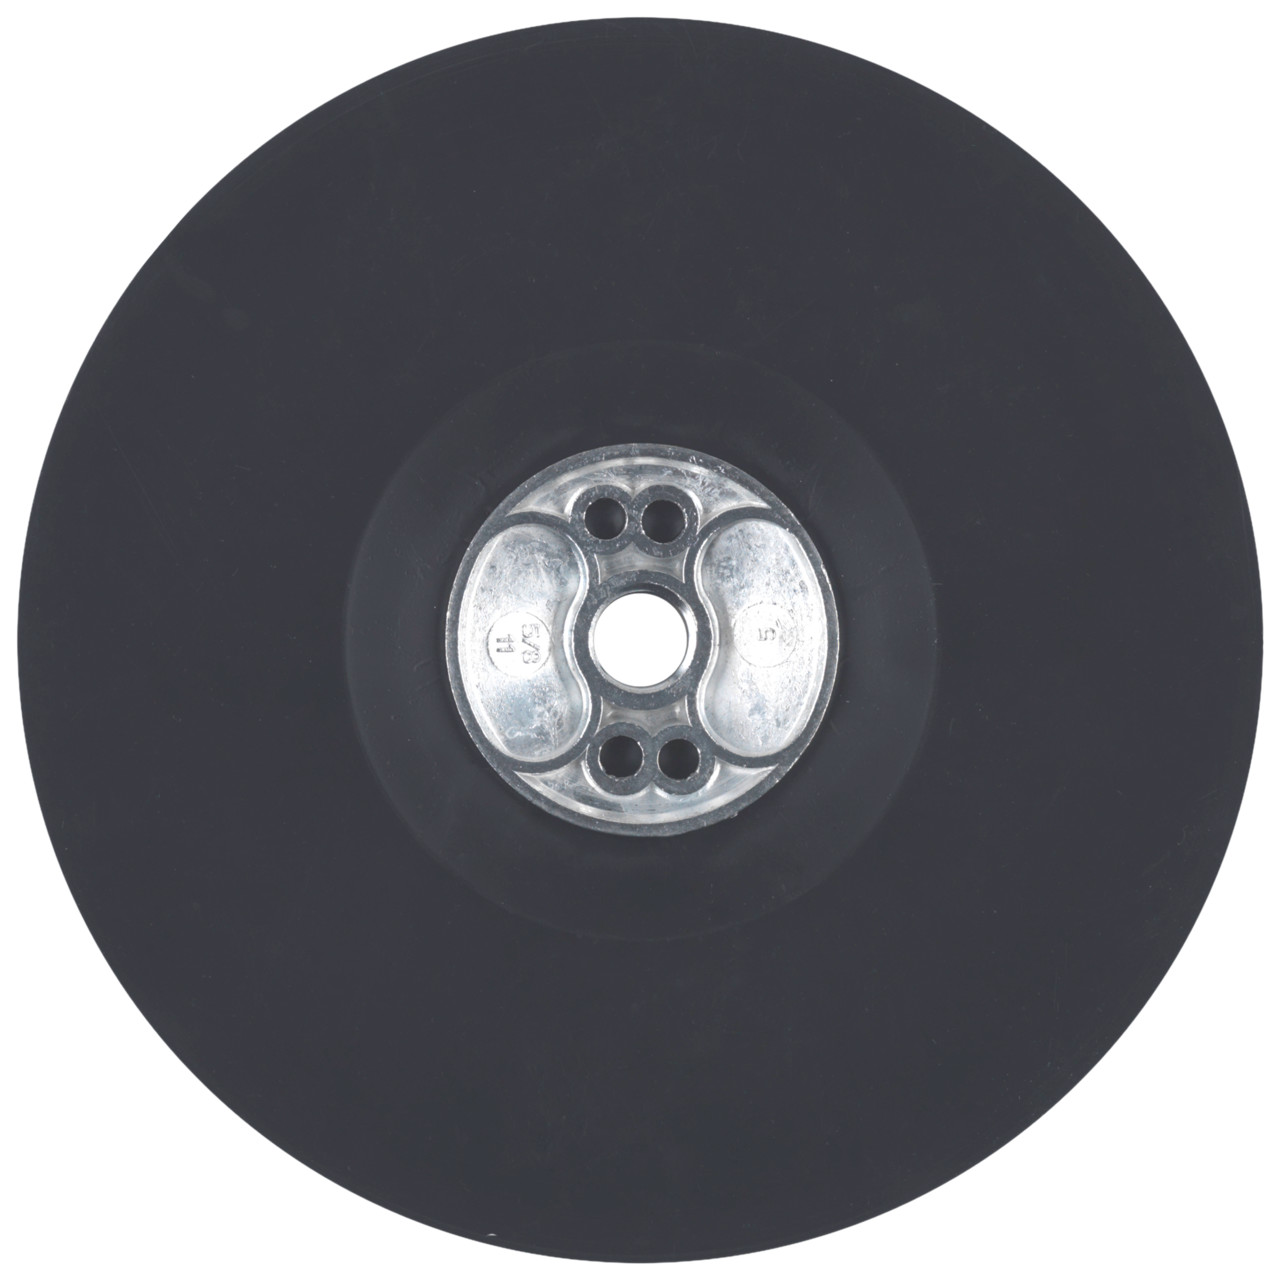 Accessori Tyrolit DxH 180x22 Per disco in fibra, durezza: HARD, forma: PAD, Art. 709998